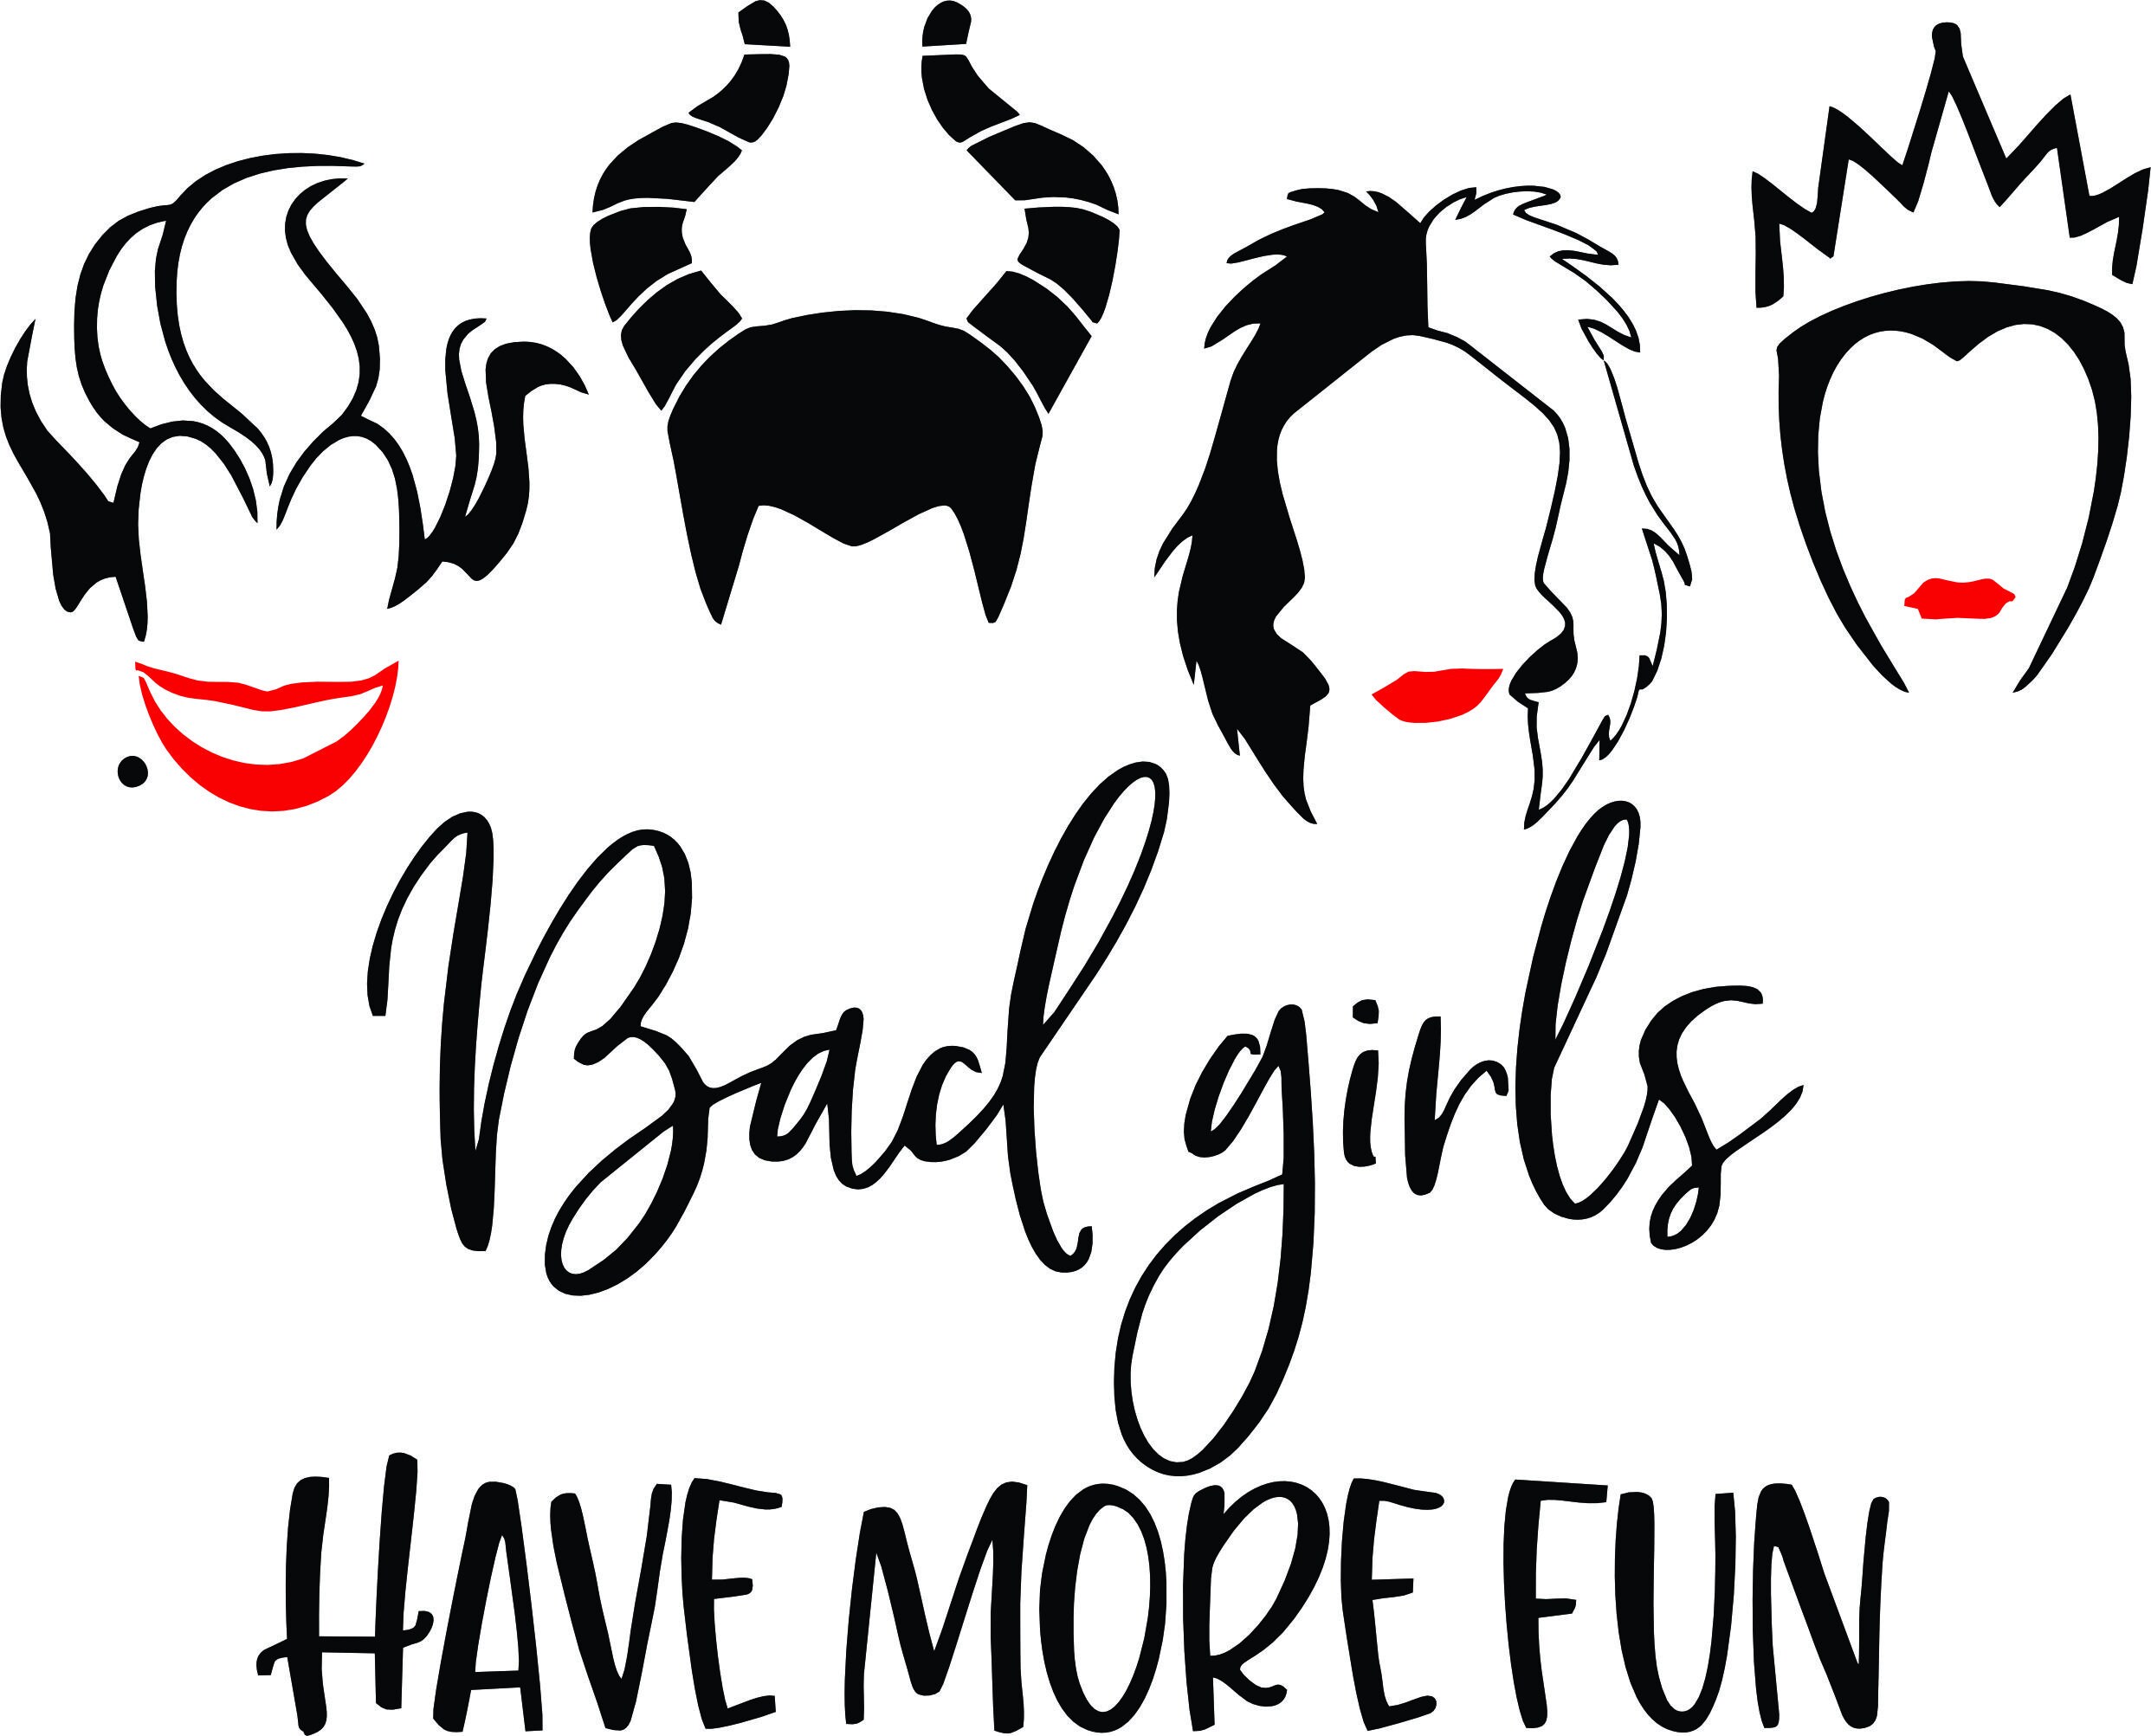 Digital Bad Girls Have More Fun Villains Download Download Now Etsy